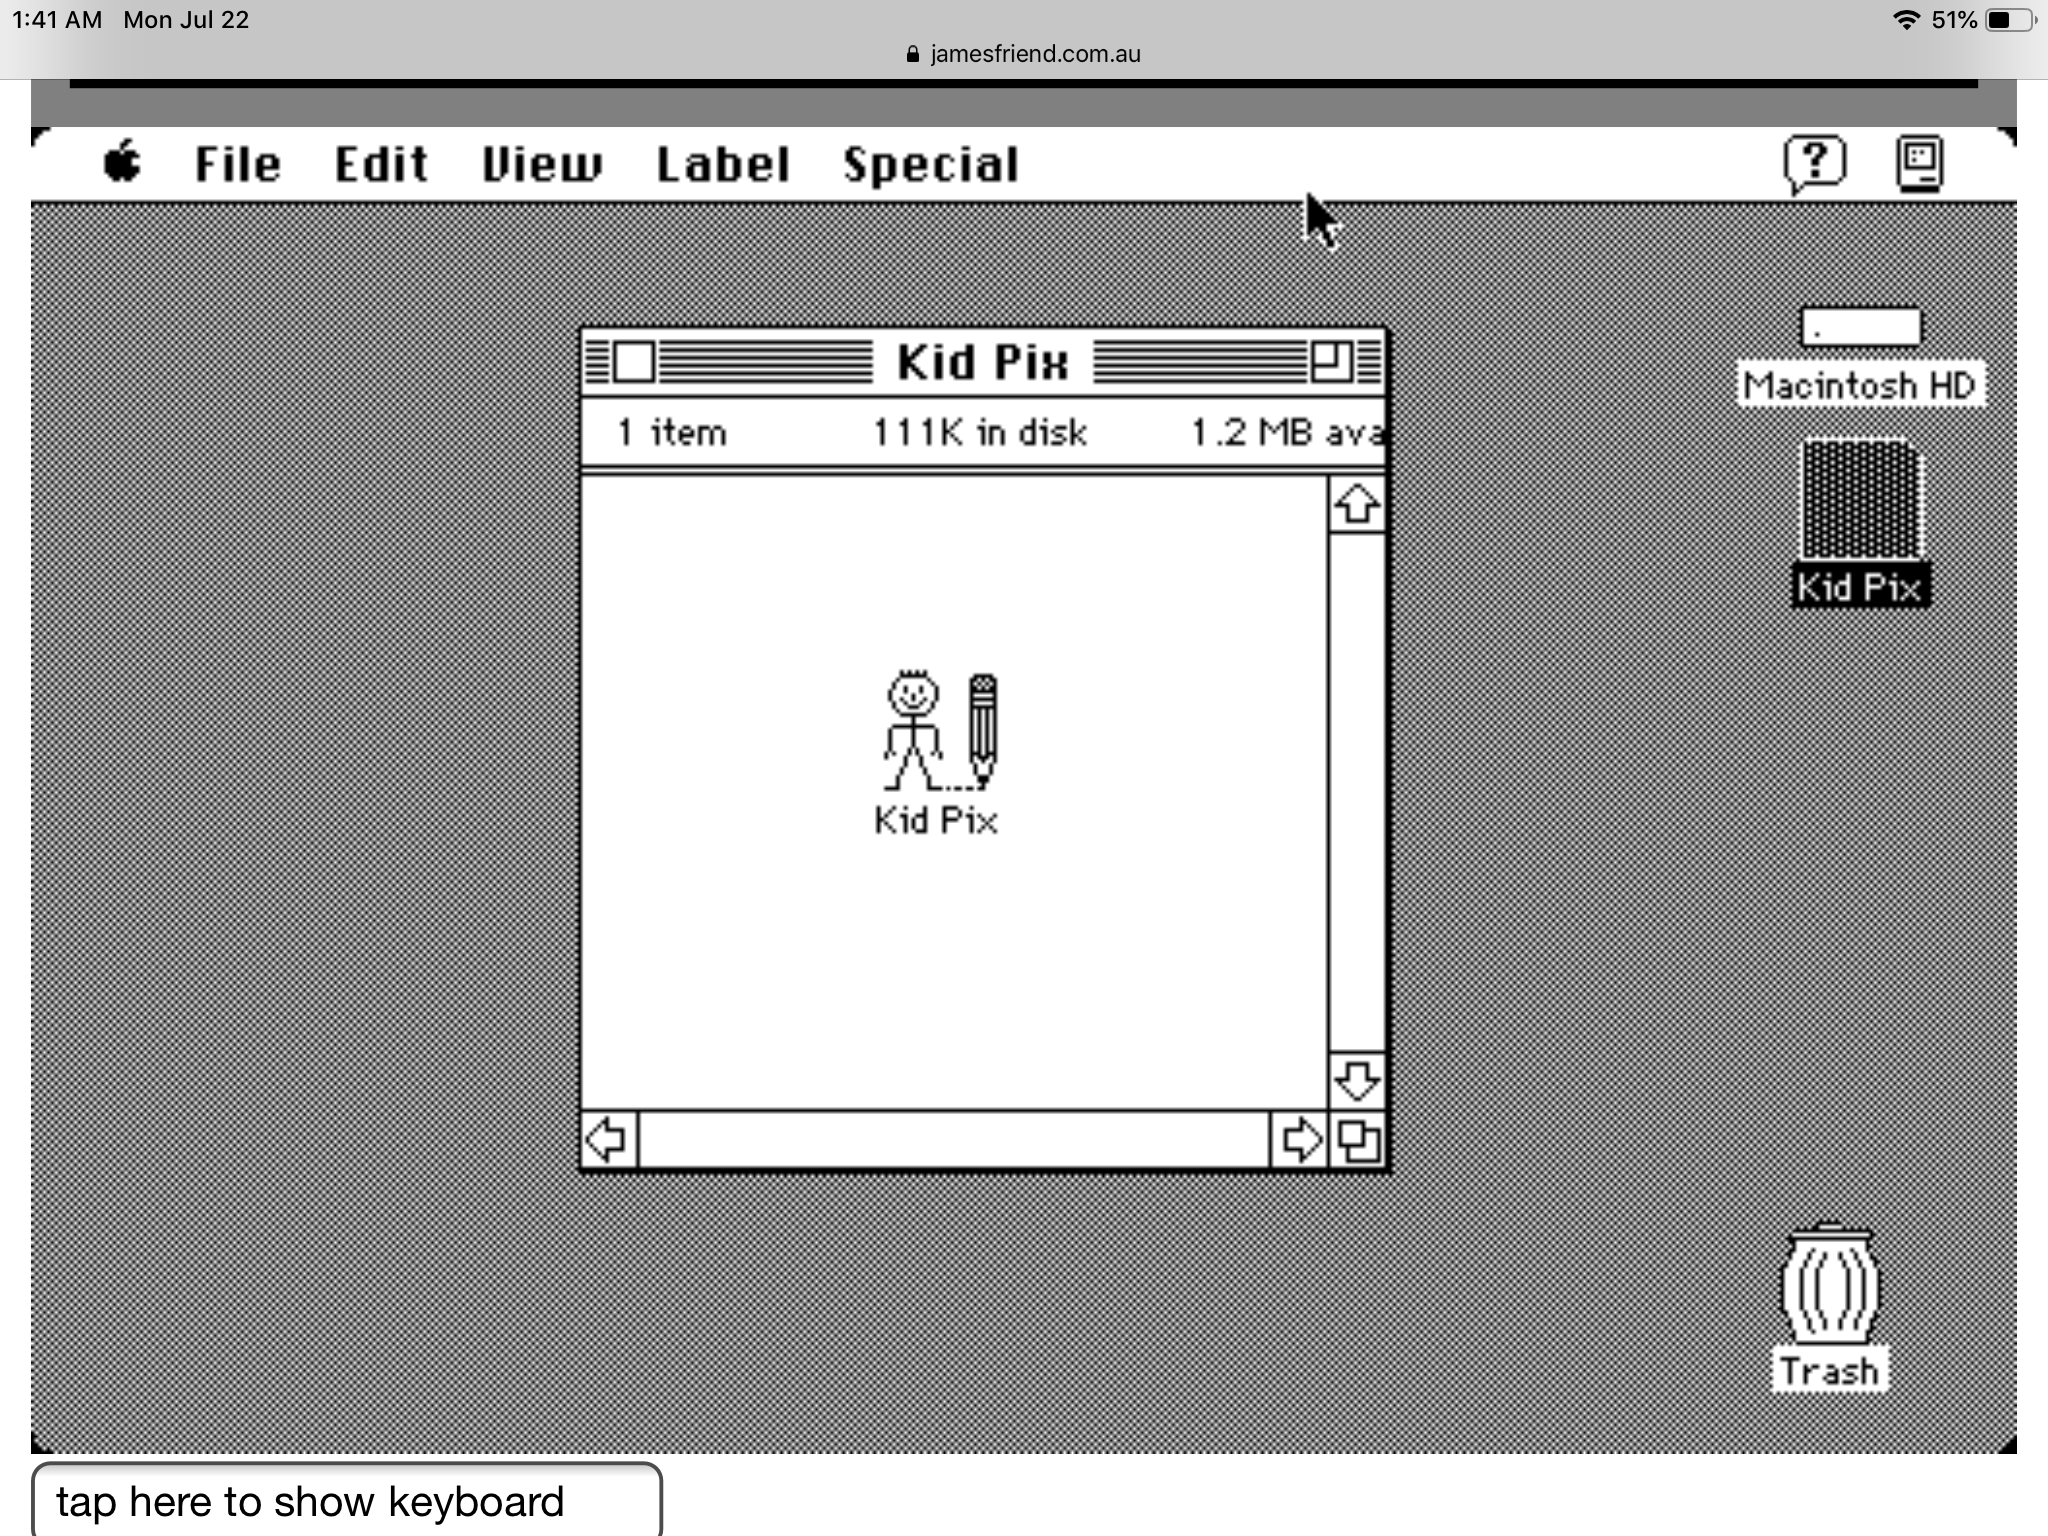 old mac system emulator